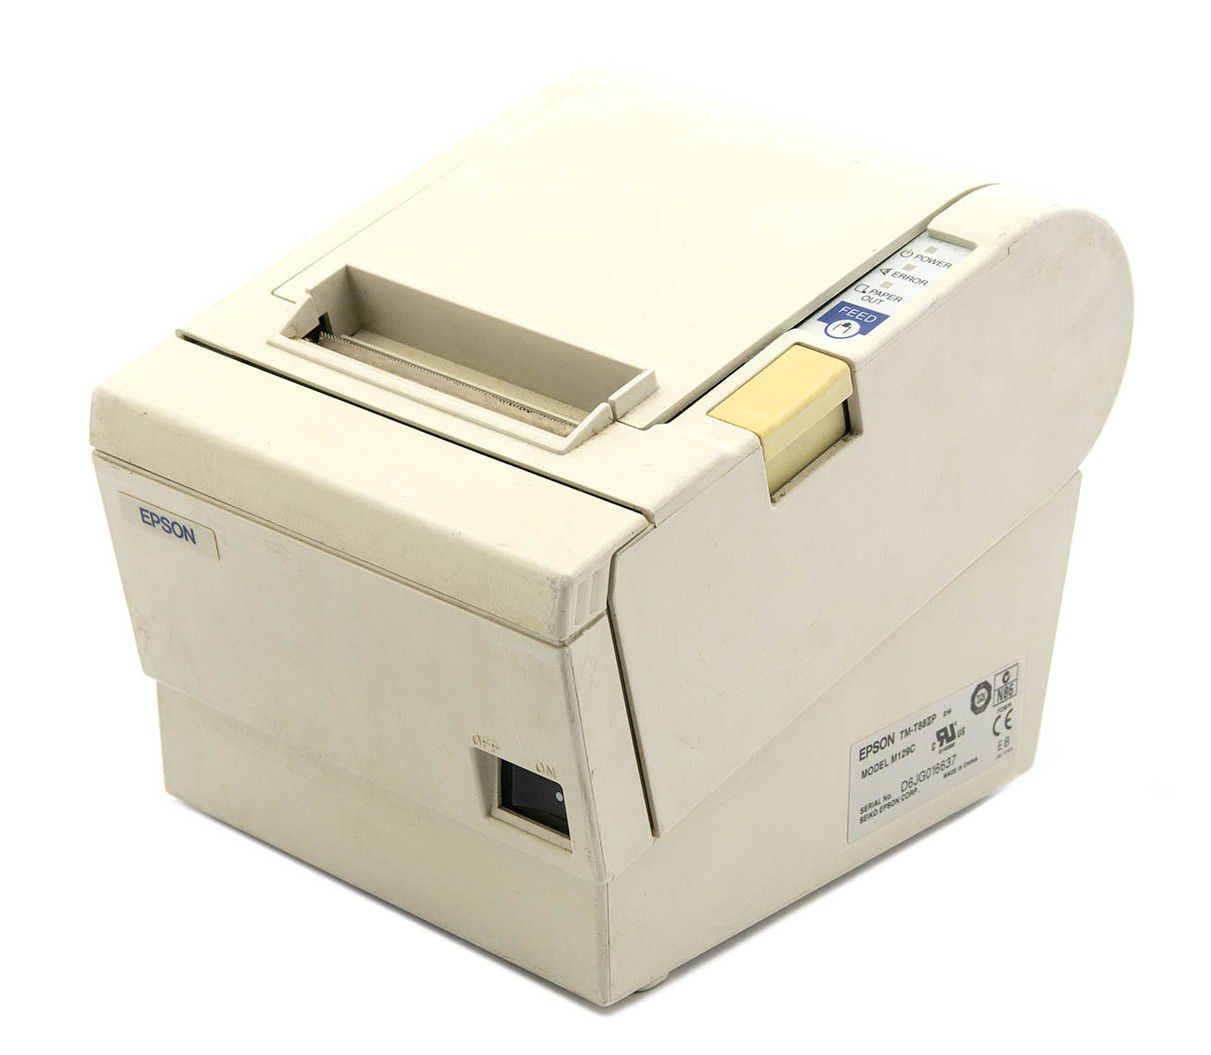 refurbished Details about   Epson TM-88iii Printer 